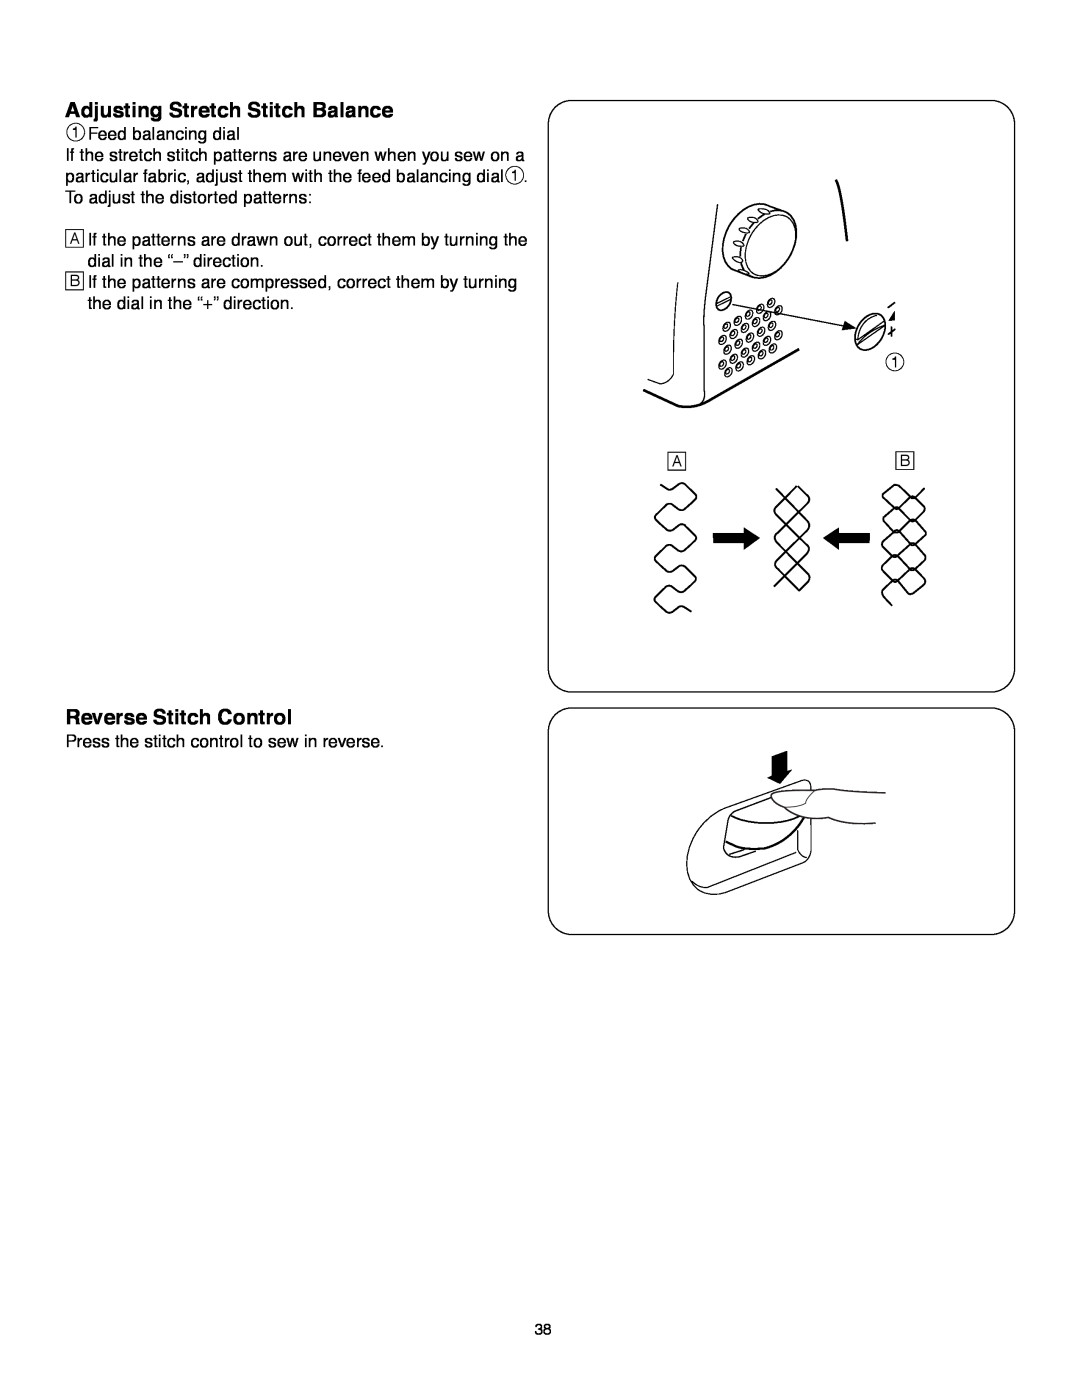 Janome MS-5027 instruction manual Adjusting Stretch Stitch Balance, Reverse Stitch Control 